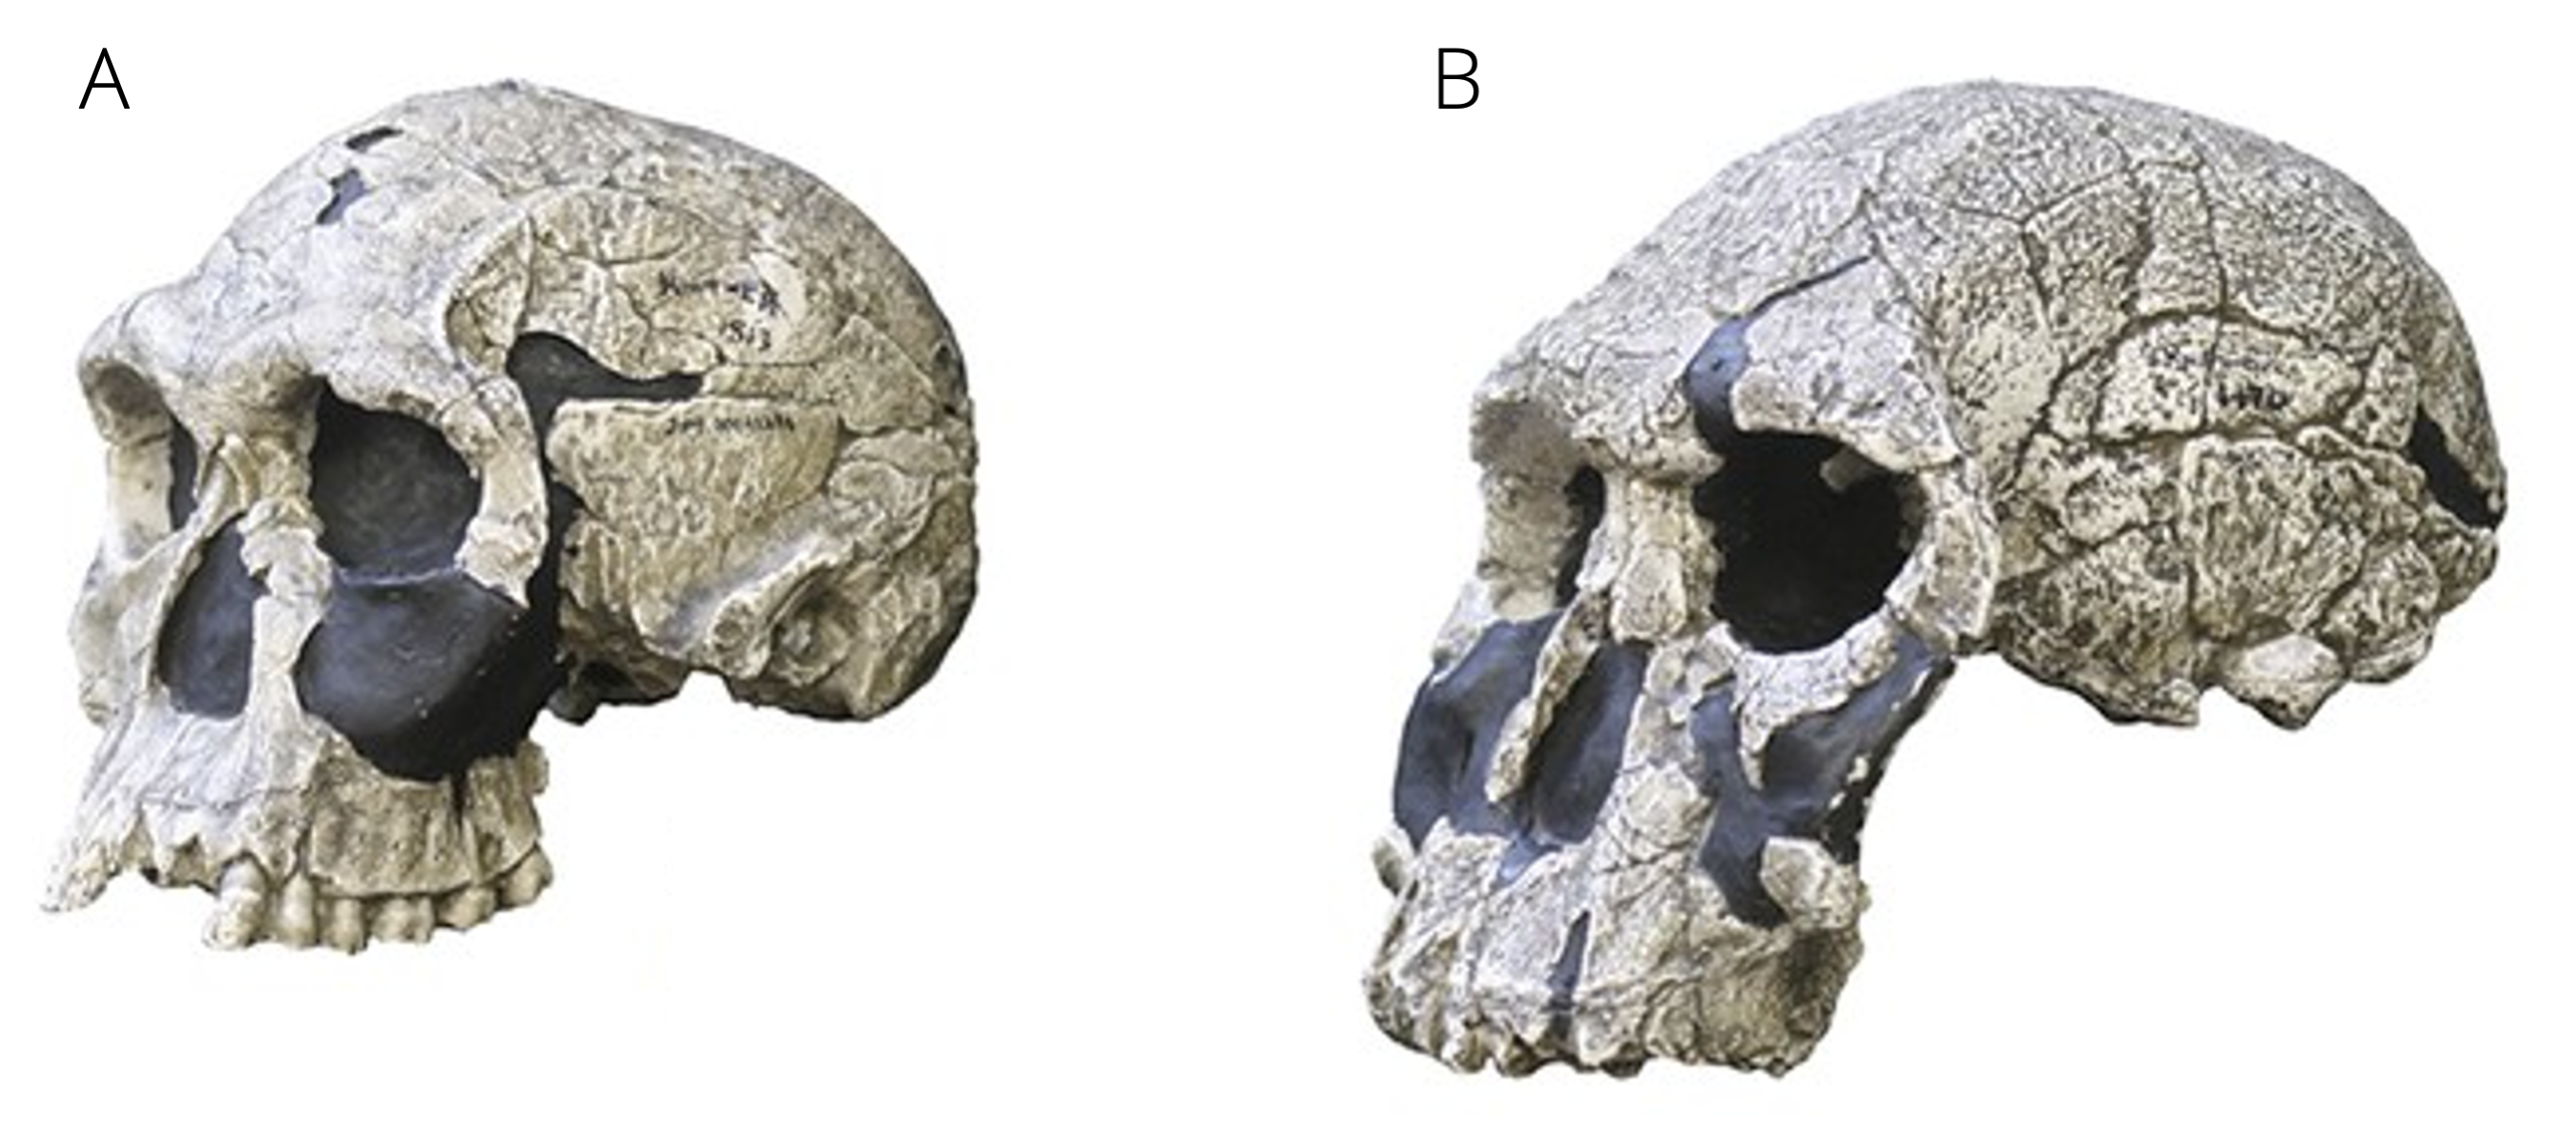 A. Skull of *Homo habilis*. B. Skull of *H. rudolfensis*. Photos by Hawks et al. (2017).